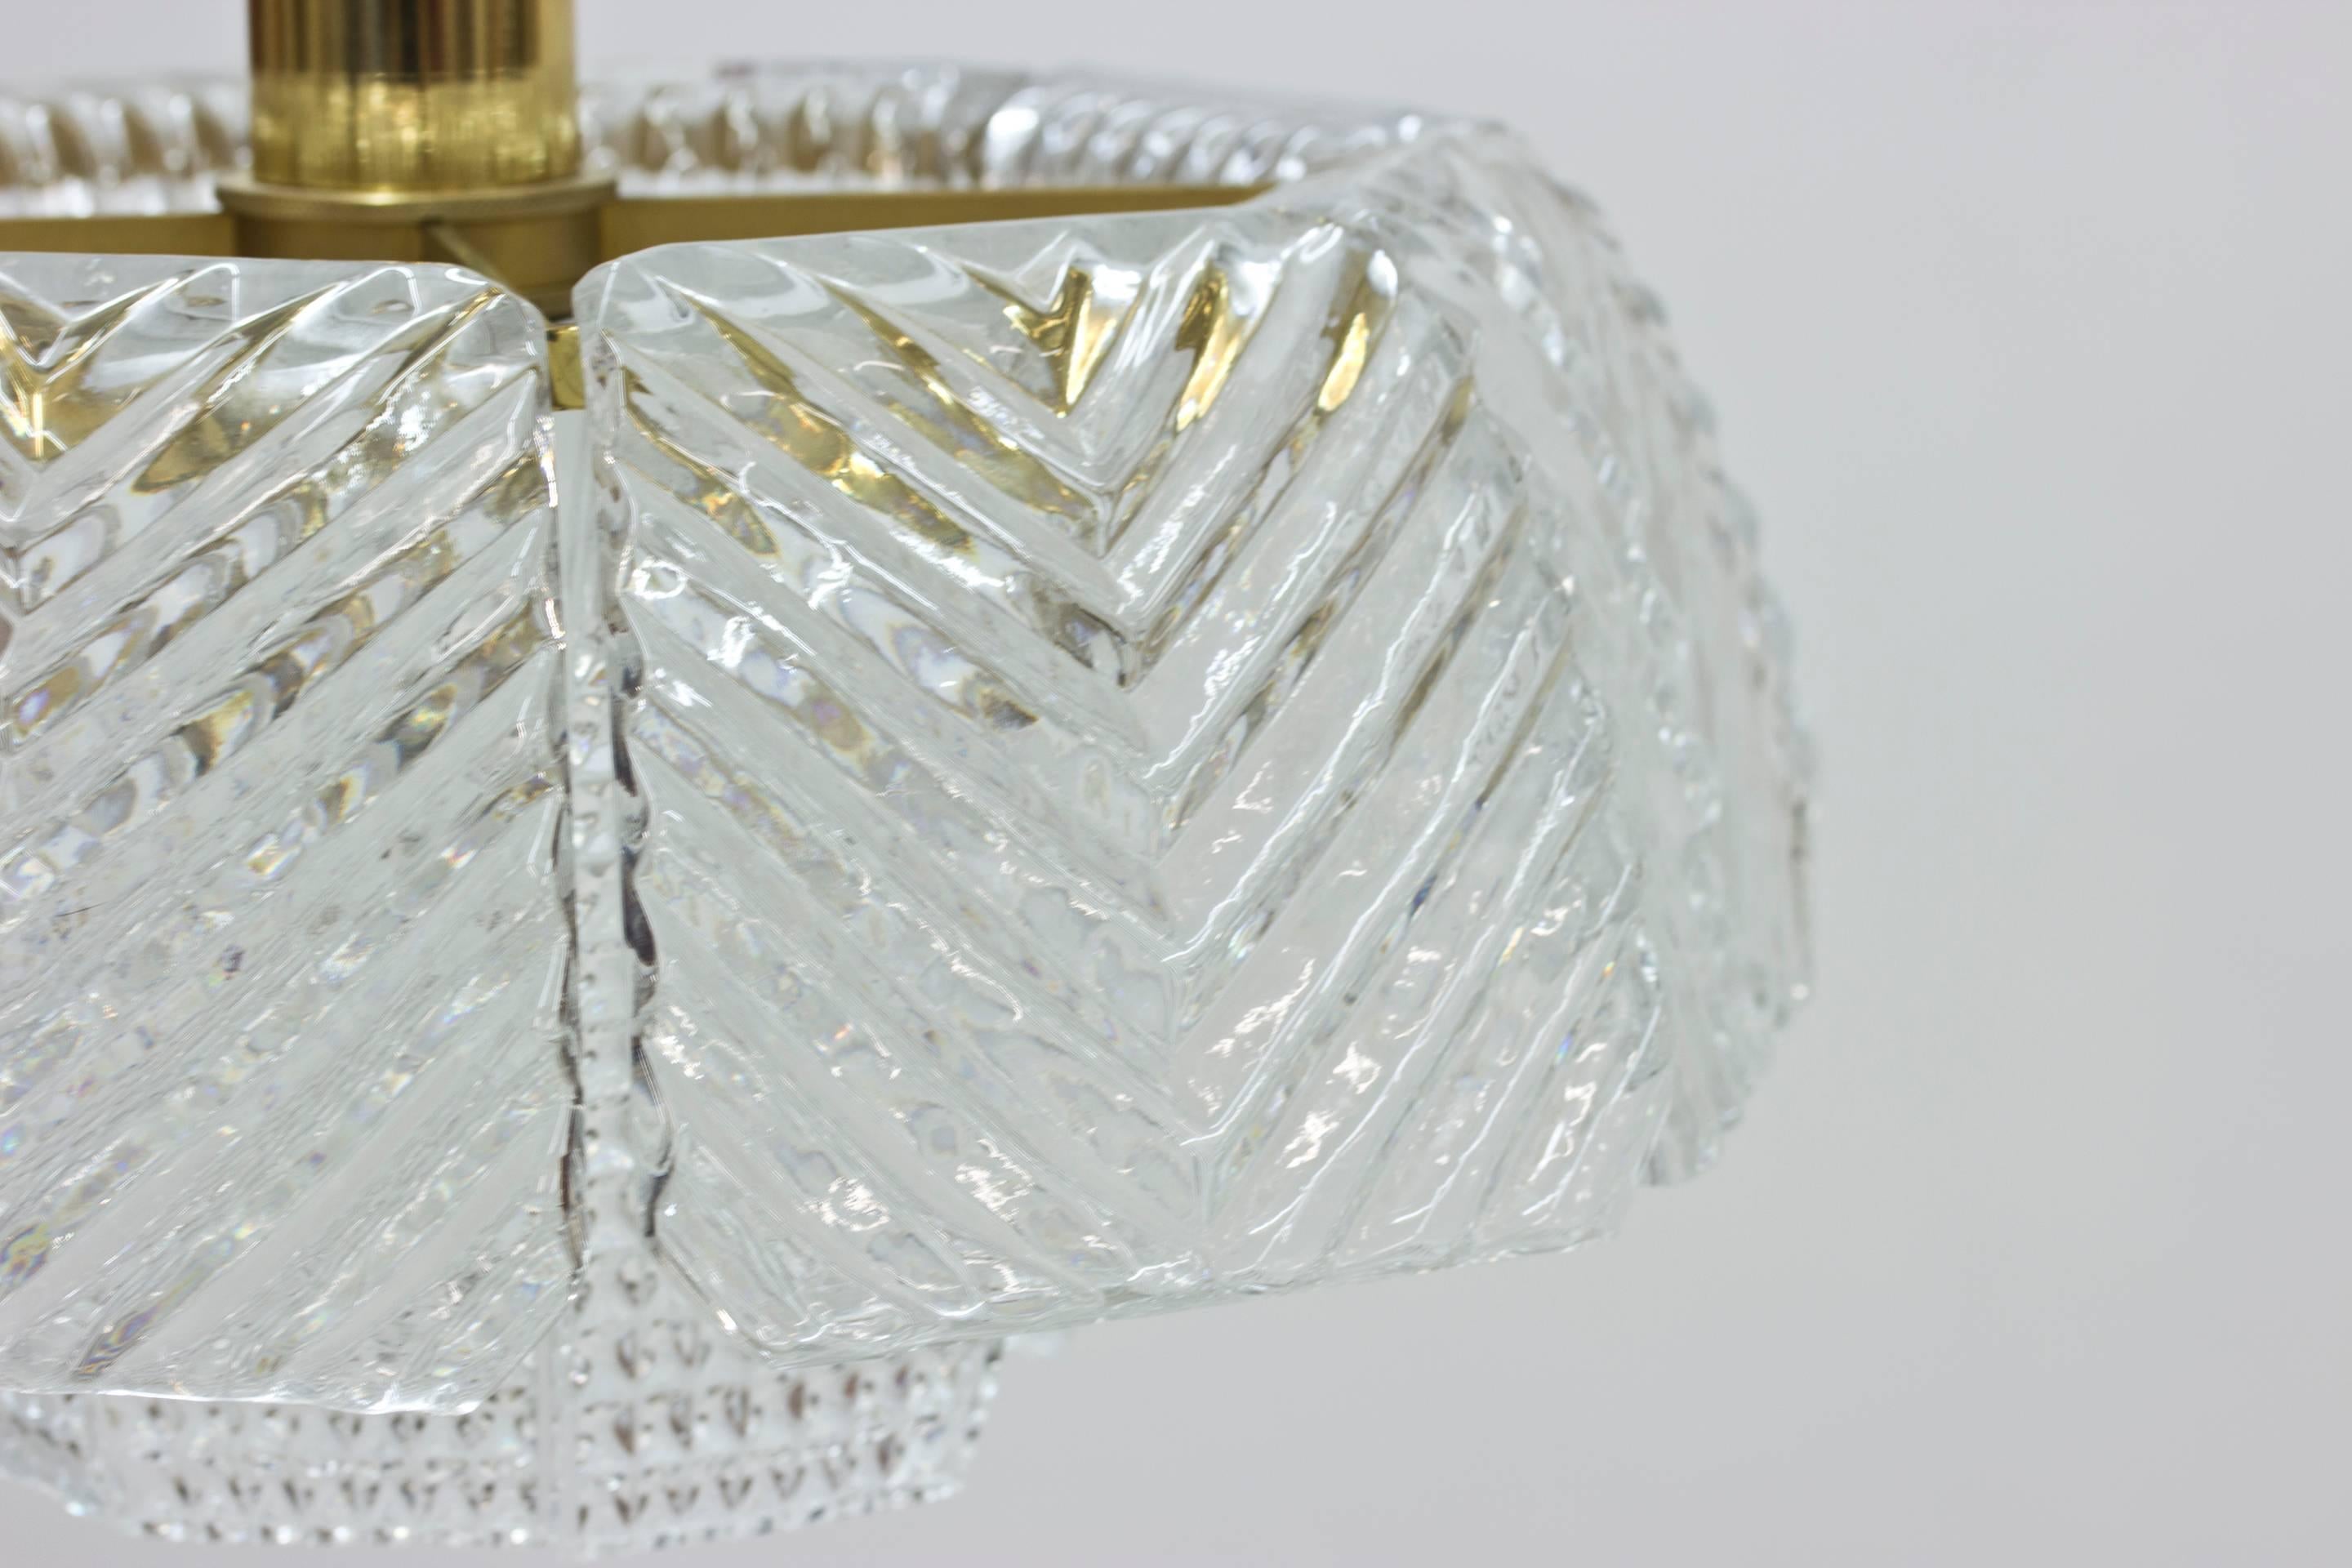 Scandinavian Modern Glass Pendant Lamp by Carl Fagerlund for Orrefors, Sweden. 1960s.